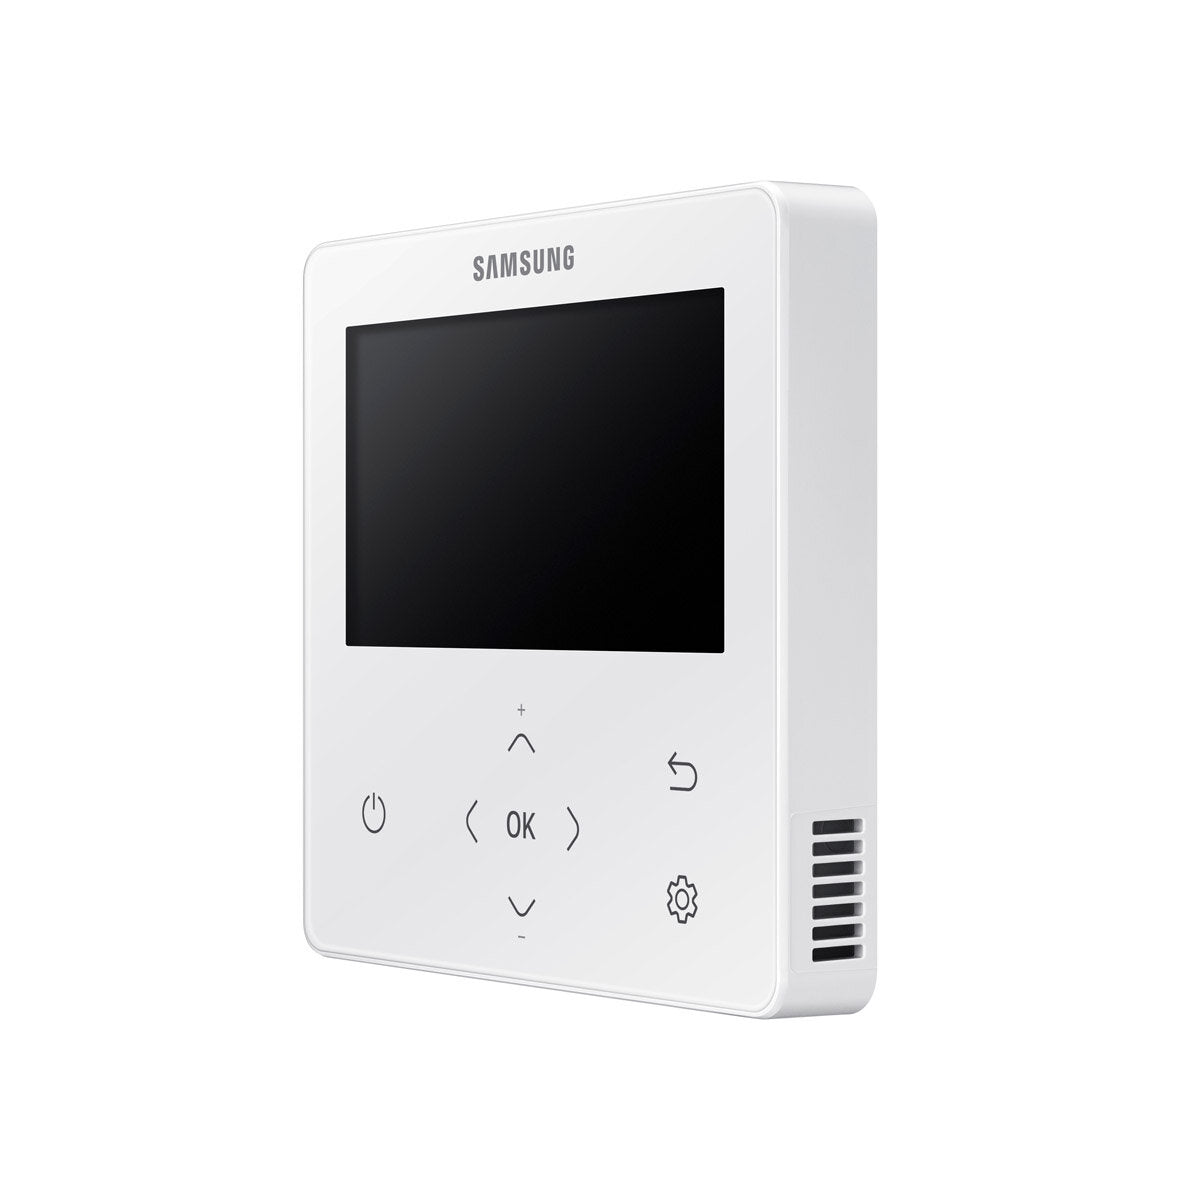 Samsung Air conditioner Windfree 4-way square split 9000 + 9000 + 12000 + 12000 BTU inverter A ++ outdoor unit 8.0 kW